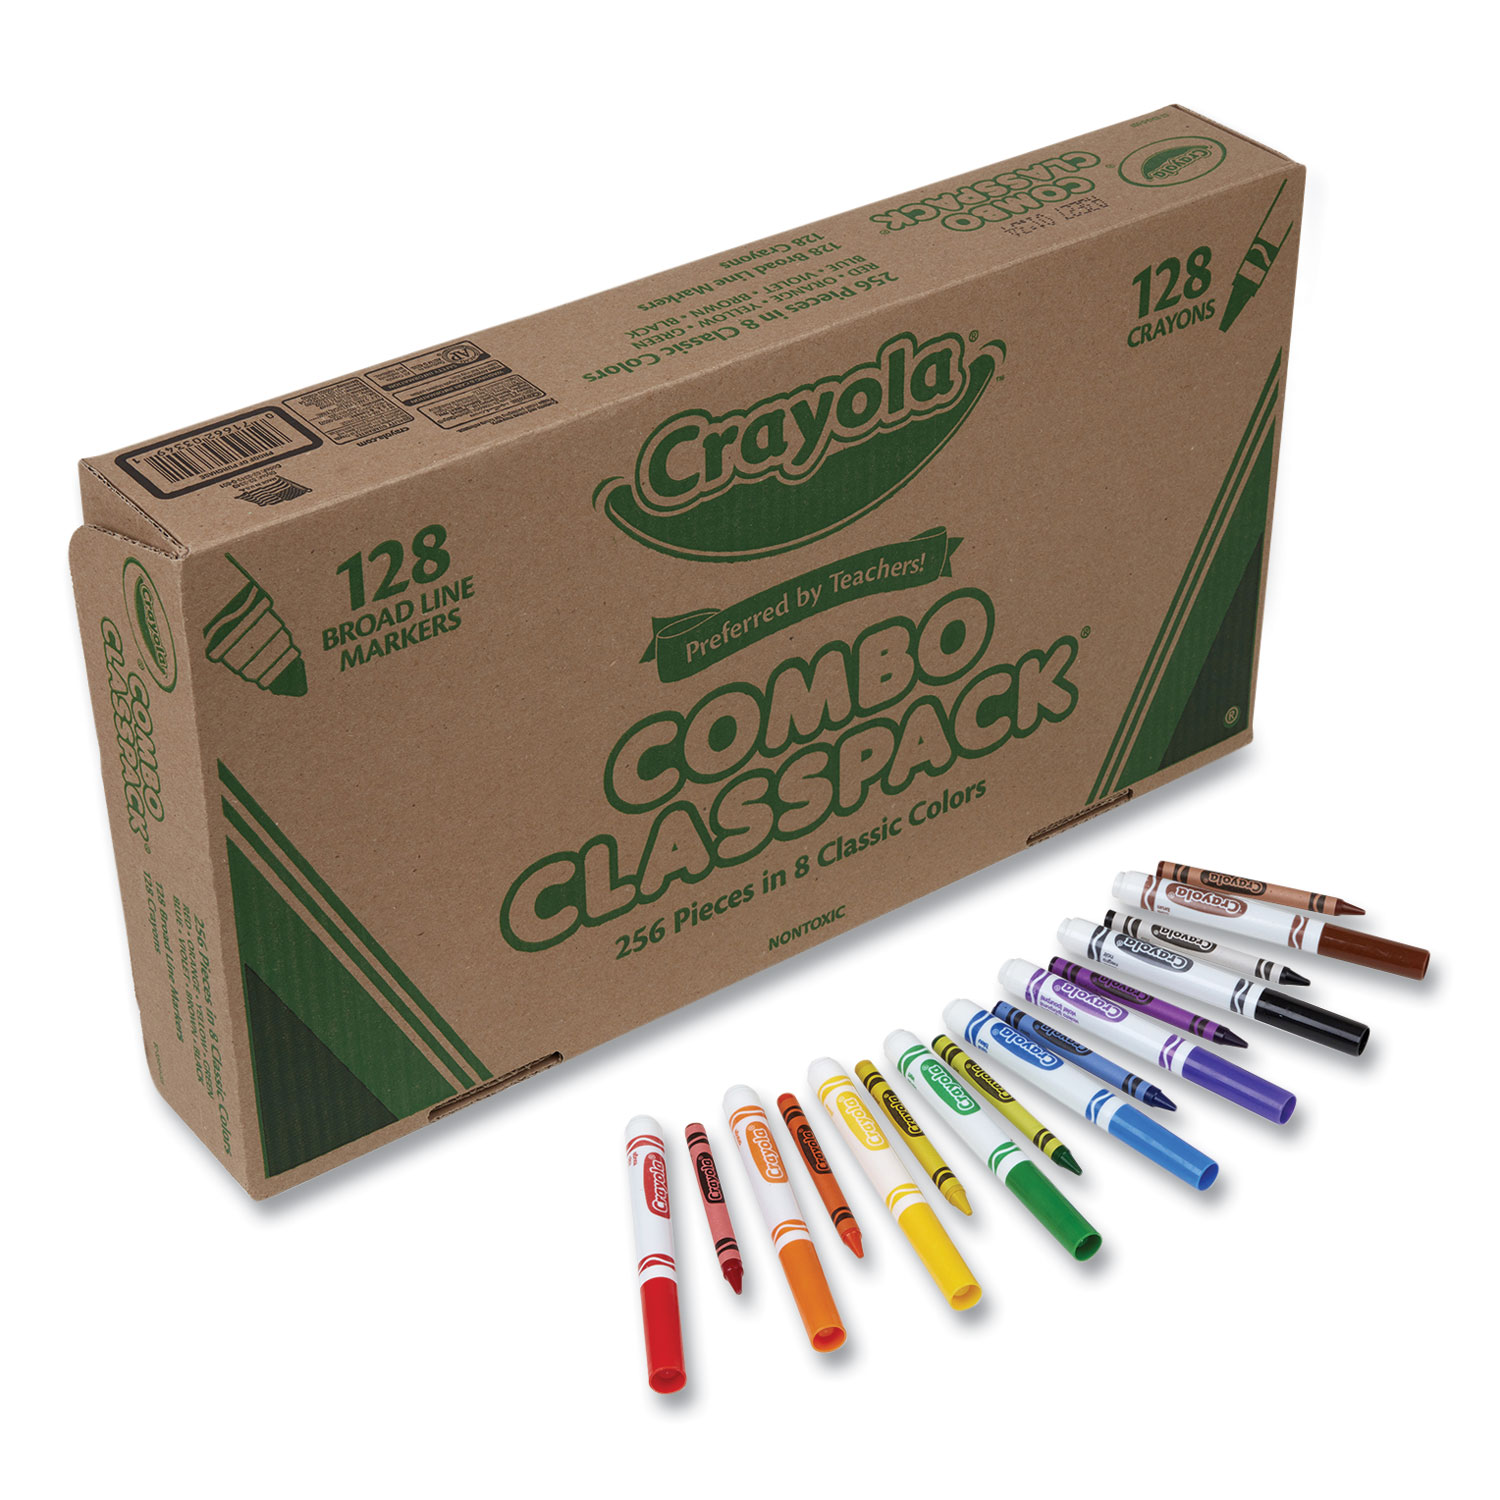 Crayola Standard Crayons Assorted Colors Box Of 16 Crayons - Office Depot